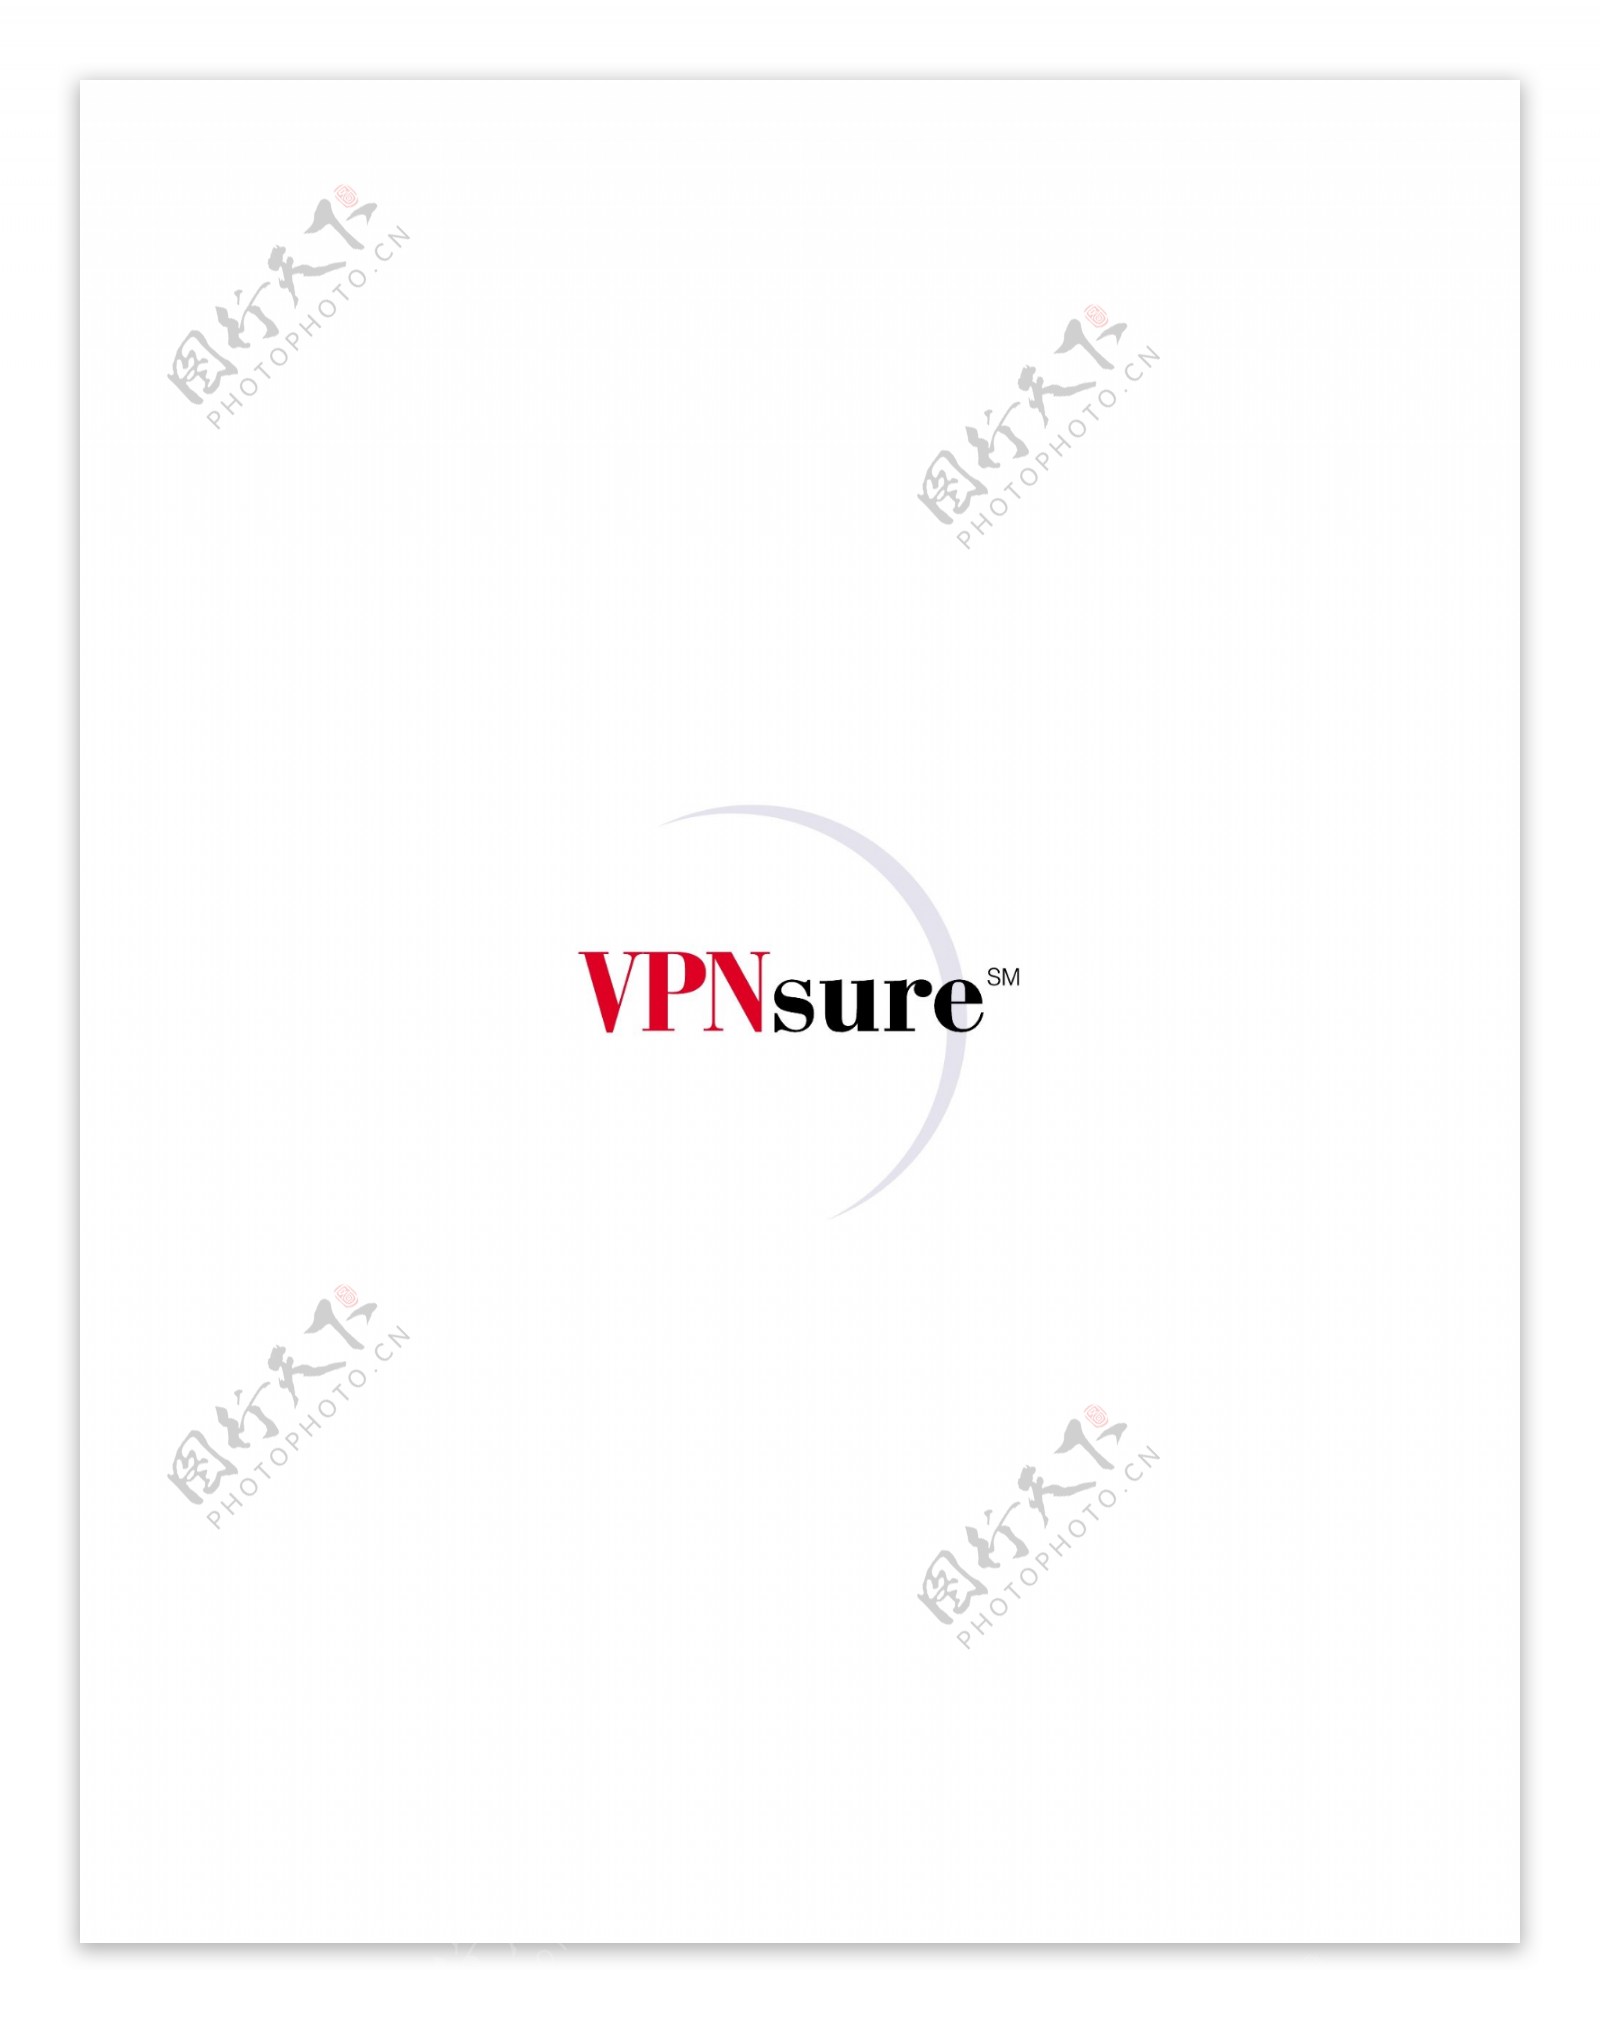 VPNsurelogo设计欣赏足球和娱乐相关标志VPNsure下载标志设计欣赏